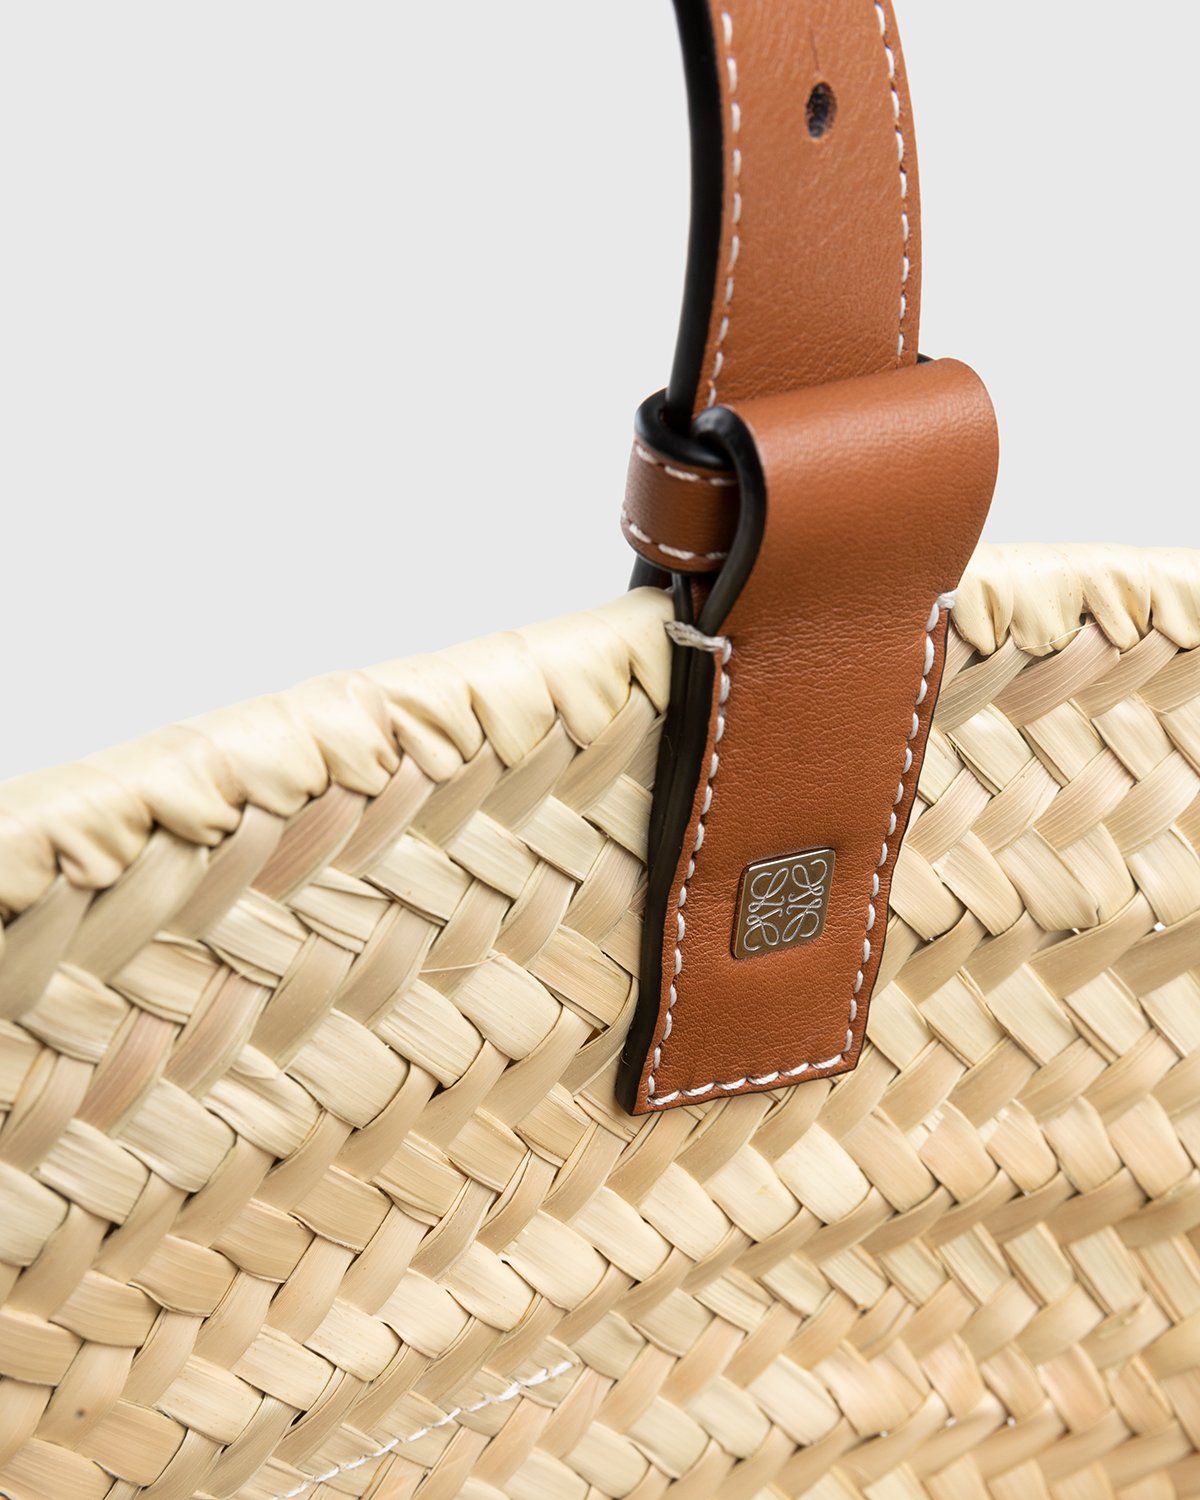 Loewe - Paula's Ibiza Basket Bag Natural/Tan - Accessories - Beige - Image 4